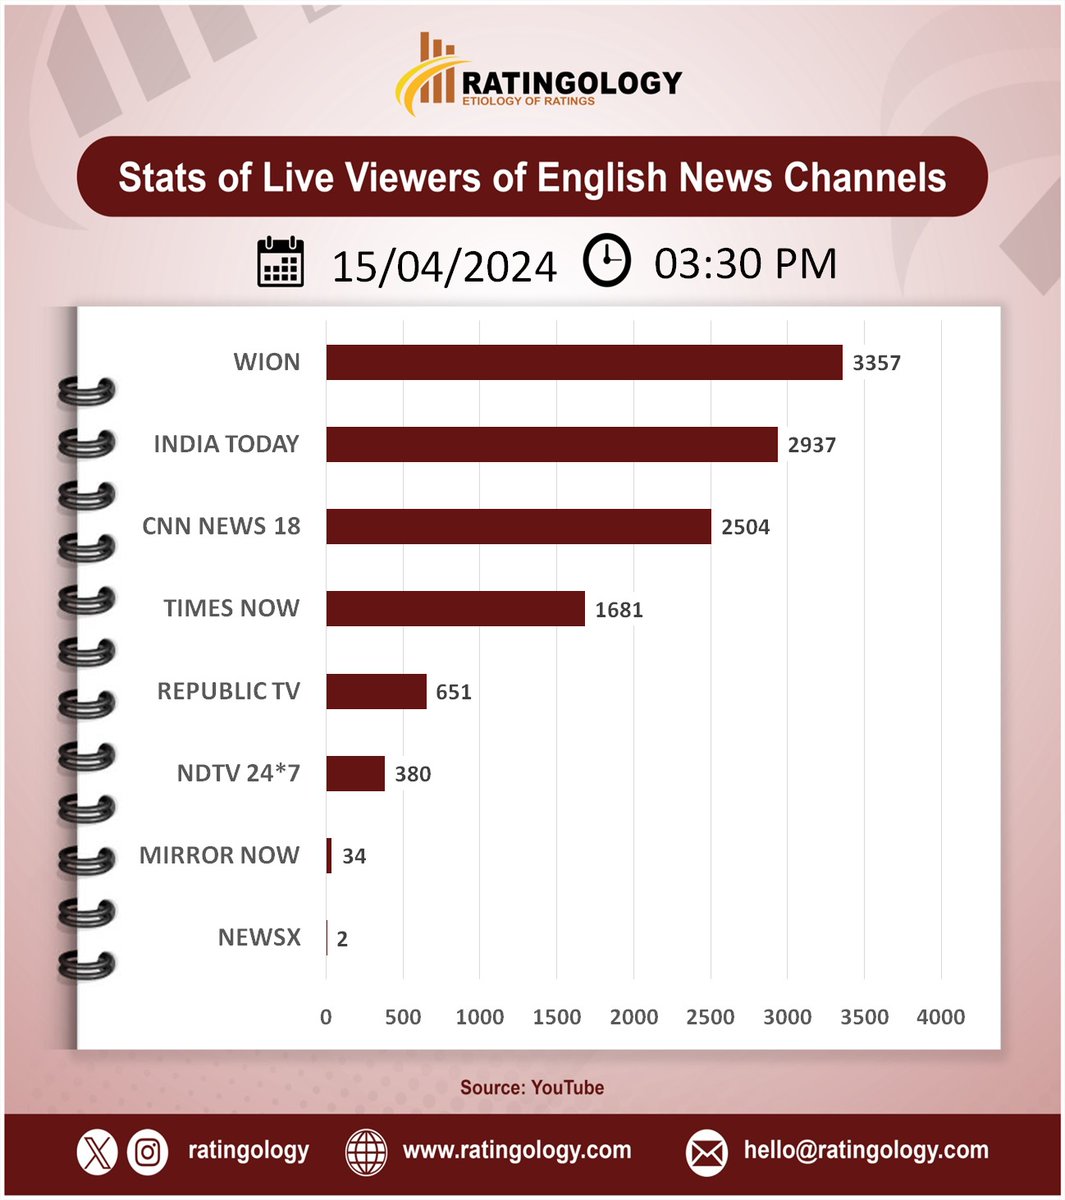 𝐒𝐭𝐚𝐭𝐬 𝐨𝐟 𝐥𝐢𝐯𝐞 𝐯𝐢𝐞𝐰𝐞𝐫𝐬 𝐨𝐧 #Youtube of #EnglishMedia #channelsat 03:30pm, Date: 15/April/2024  #Ratingology #Mediastats #RatingsKaBaap #DataScience #IndiaToday #Wion #RepublicTV #CNNNews18 #TimesNow #NewsX #NDTV24x7 #MirrorNow